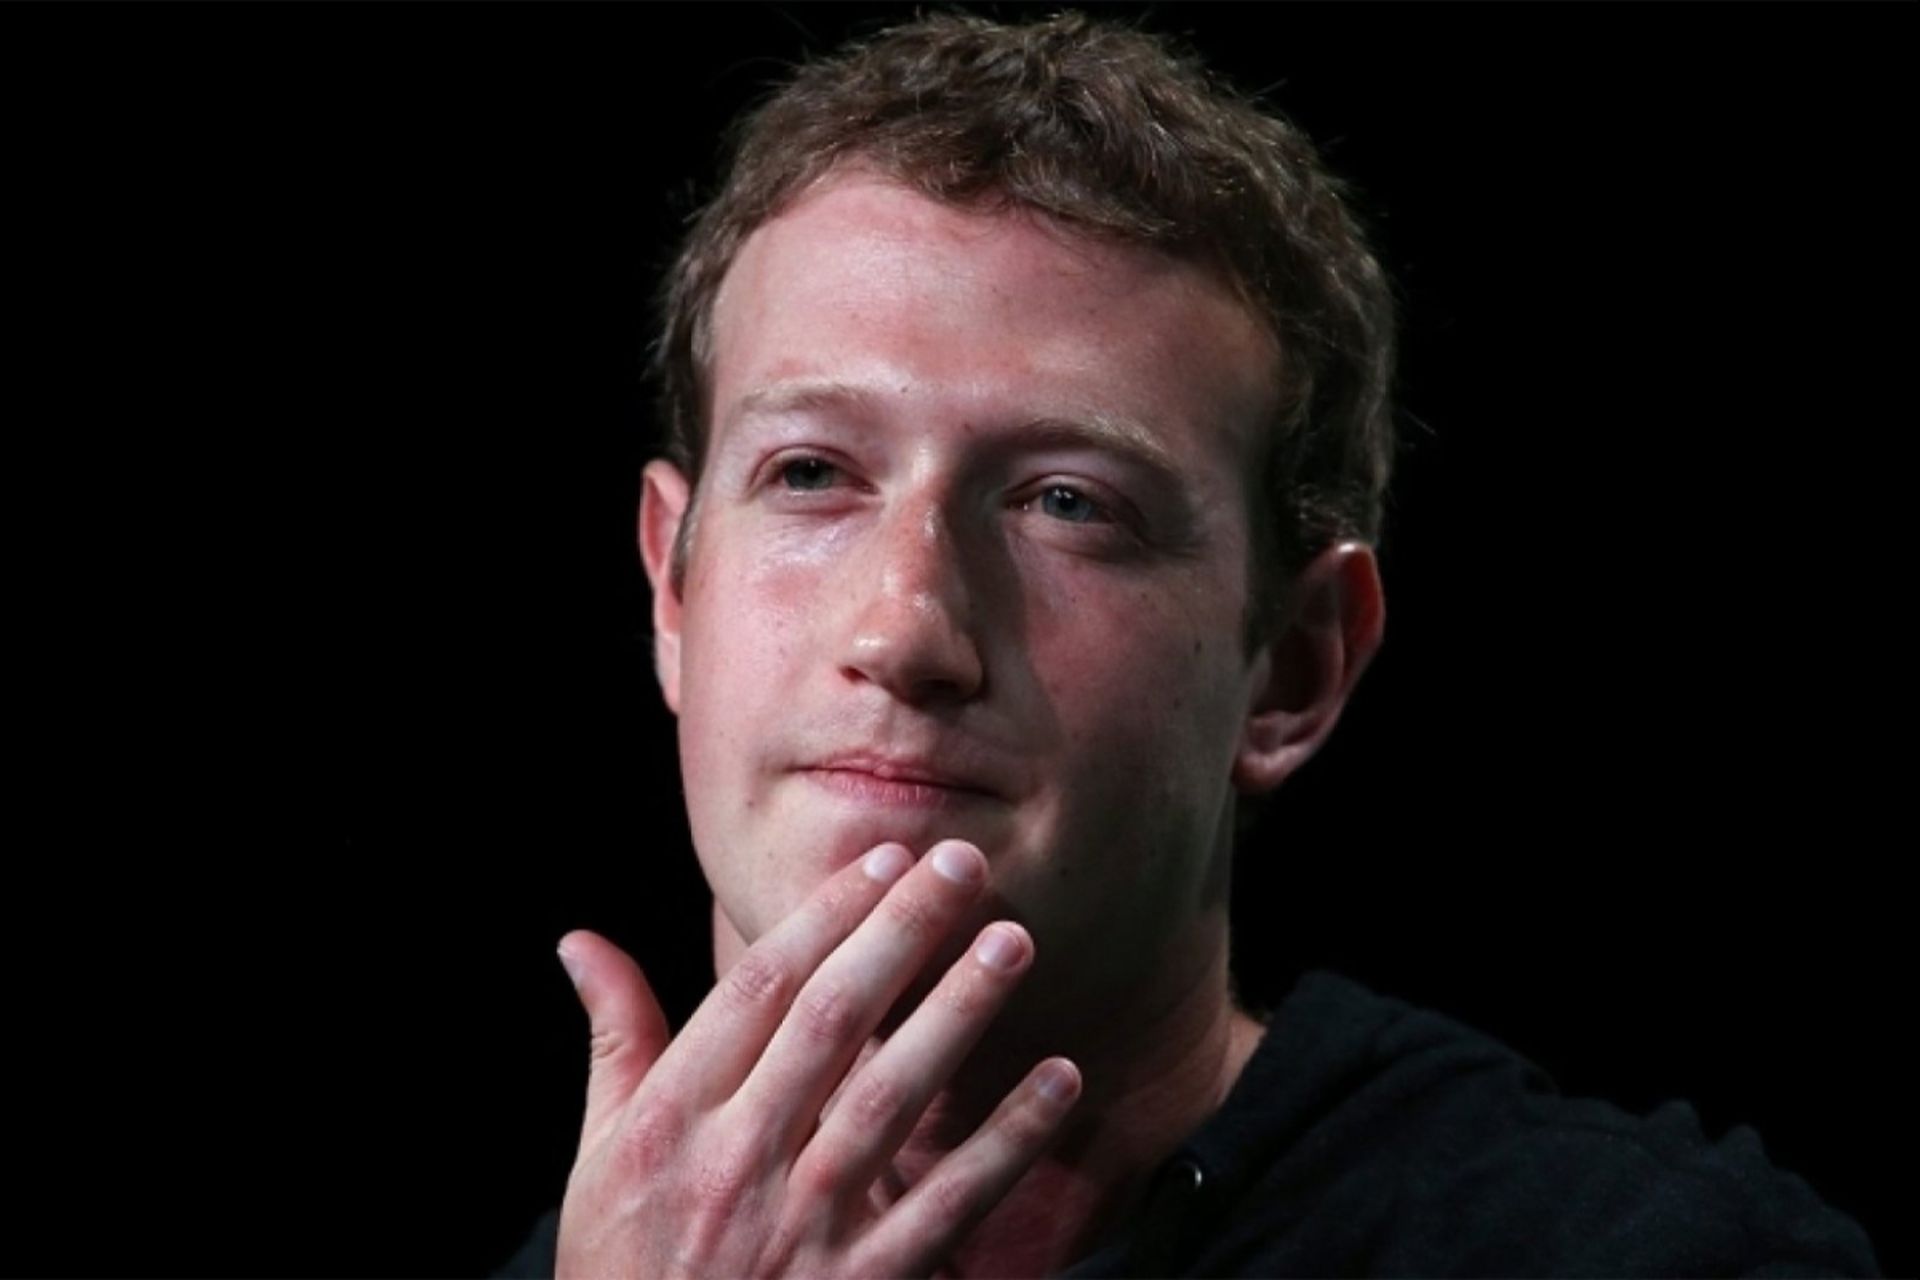 مرجع متخصصين ايران مارك زاكربرگ / Mark Zuckerberg مديرعامل فيسبوك نگران در حال فكر از نزديك